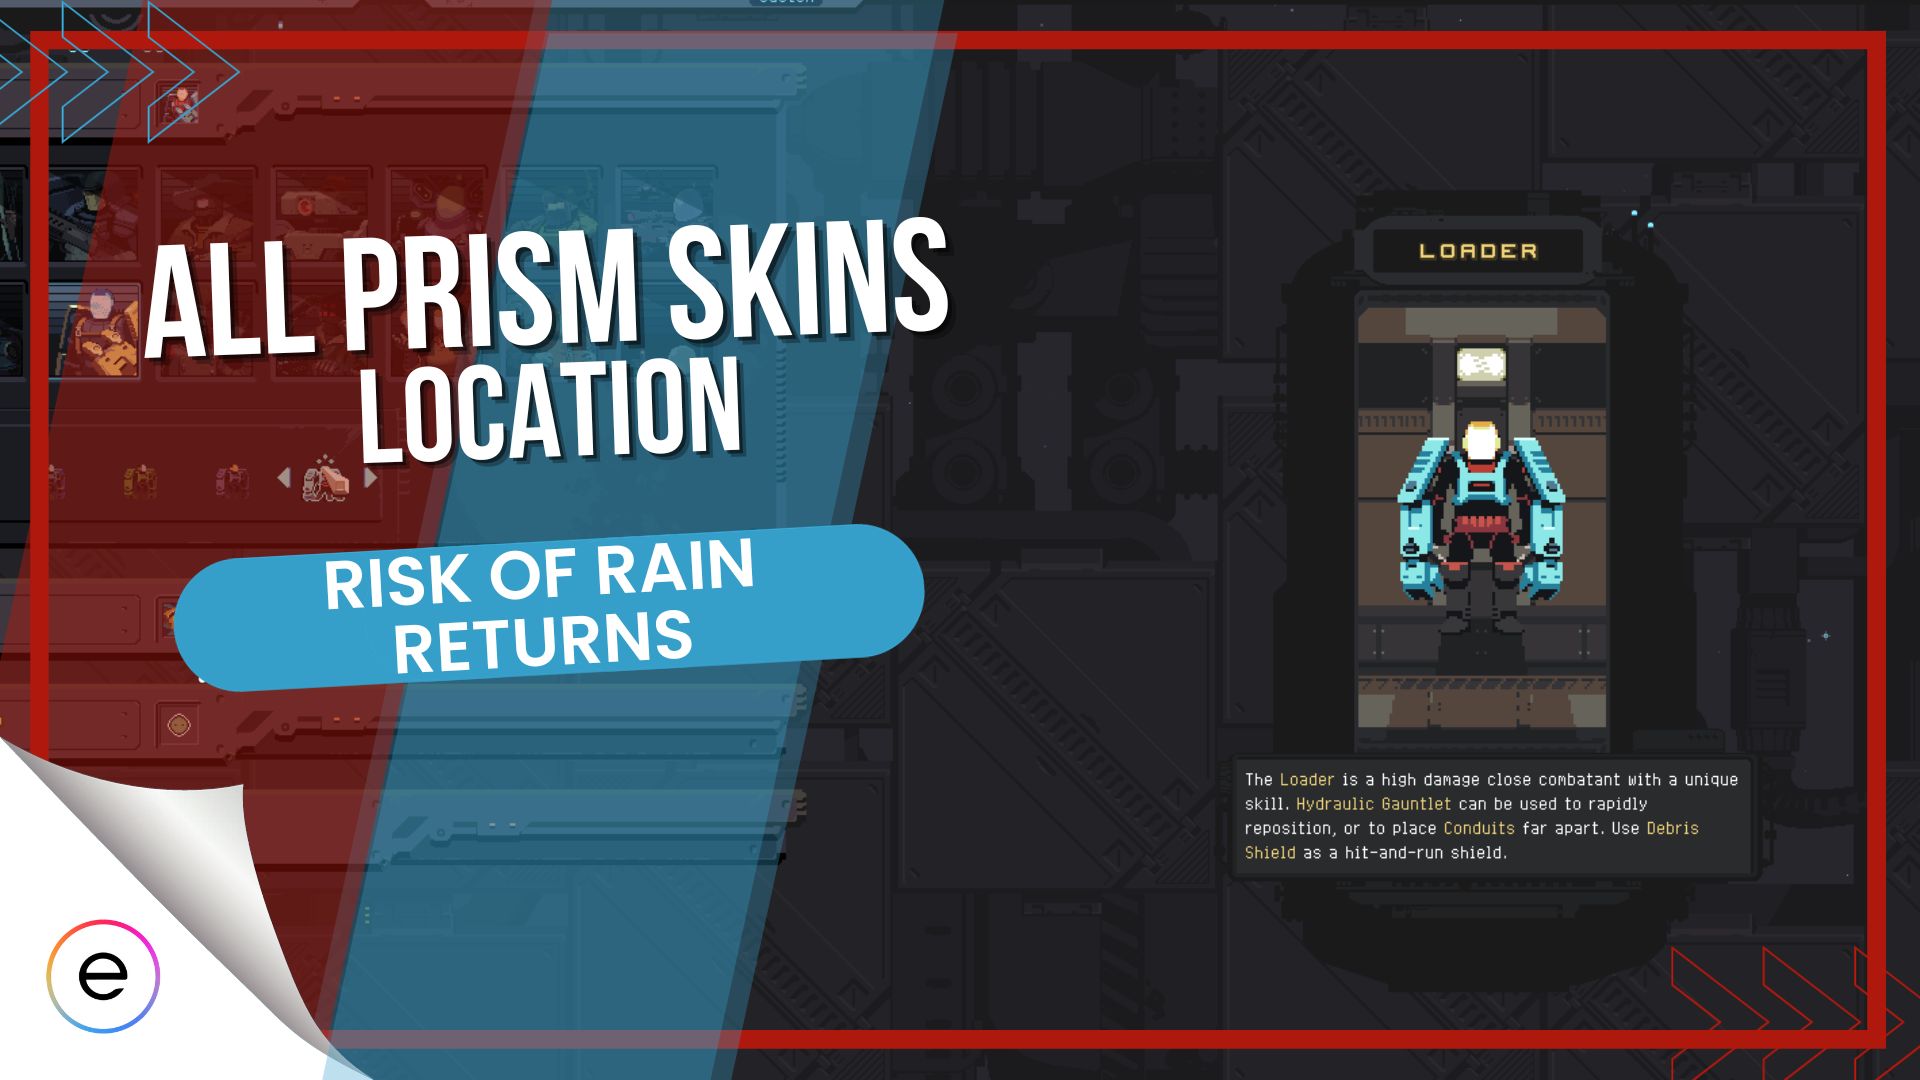 Prism skin risk of rain returns.